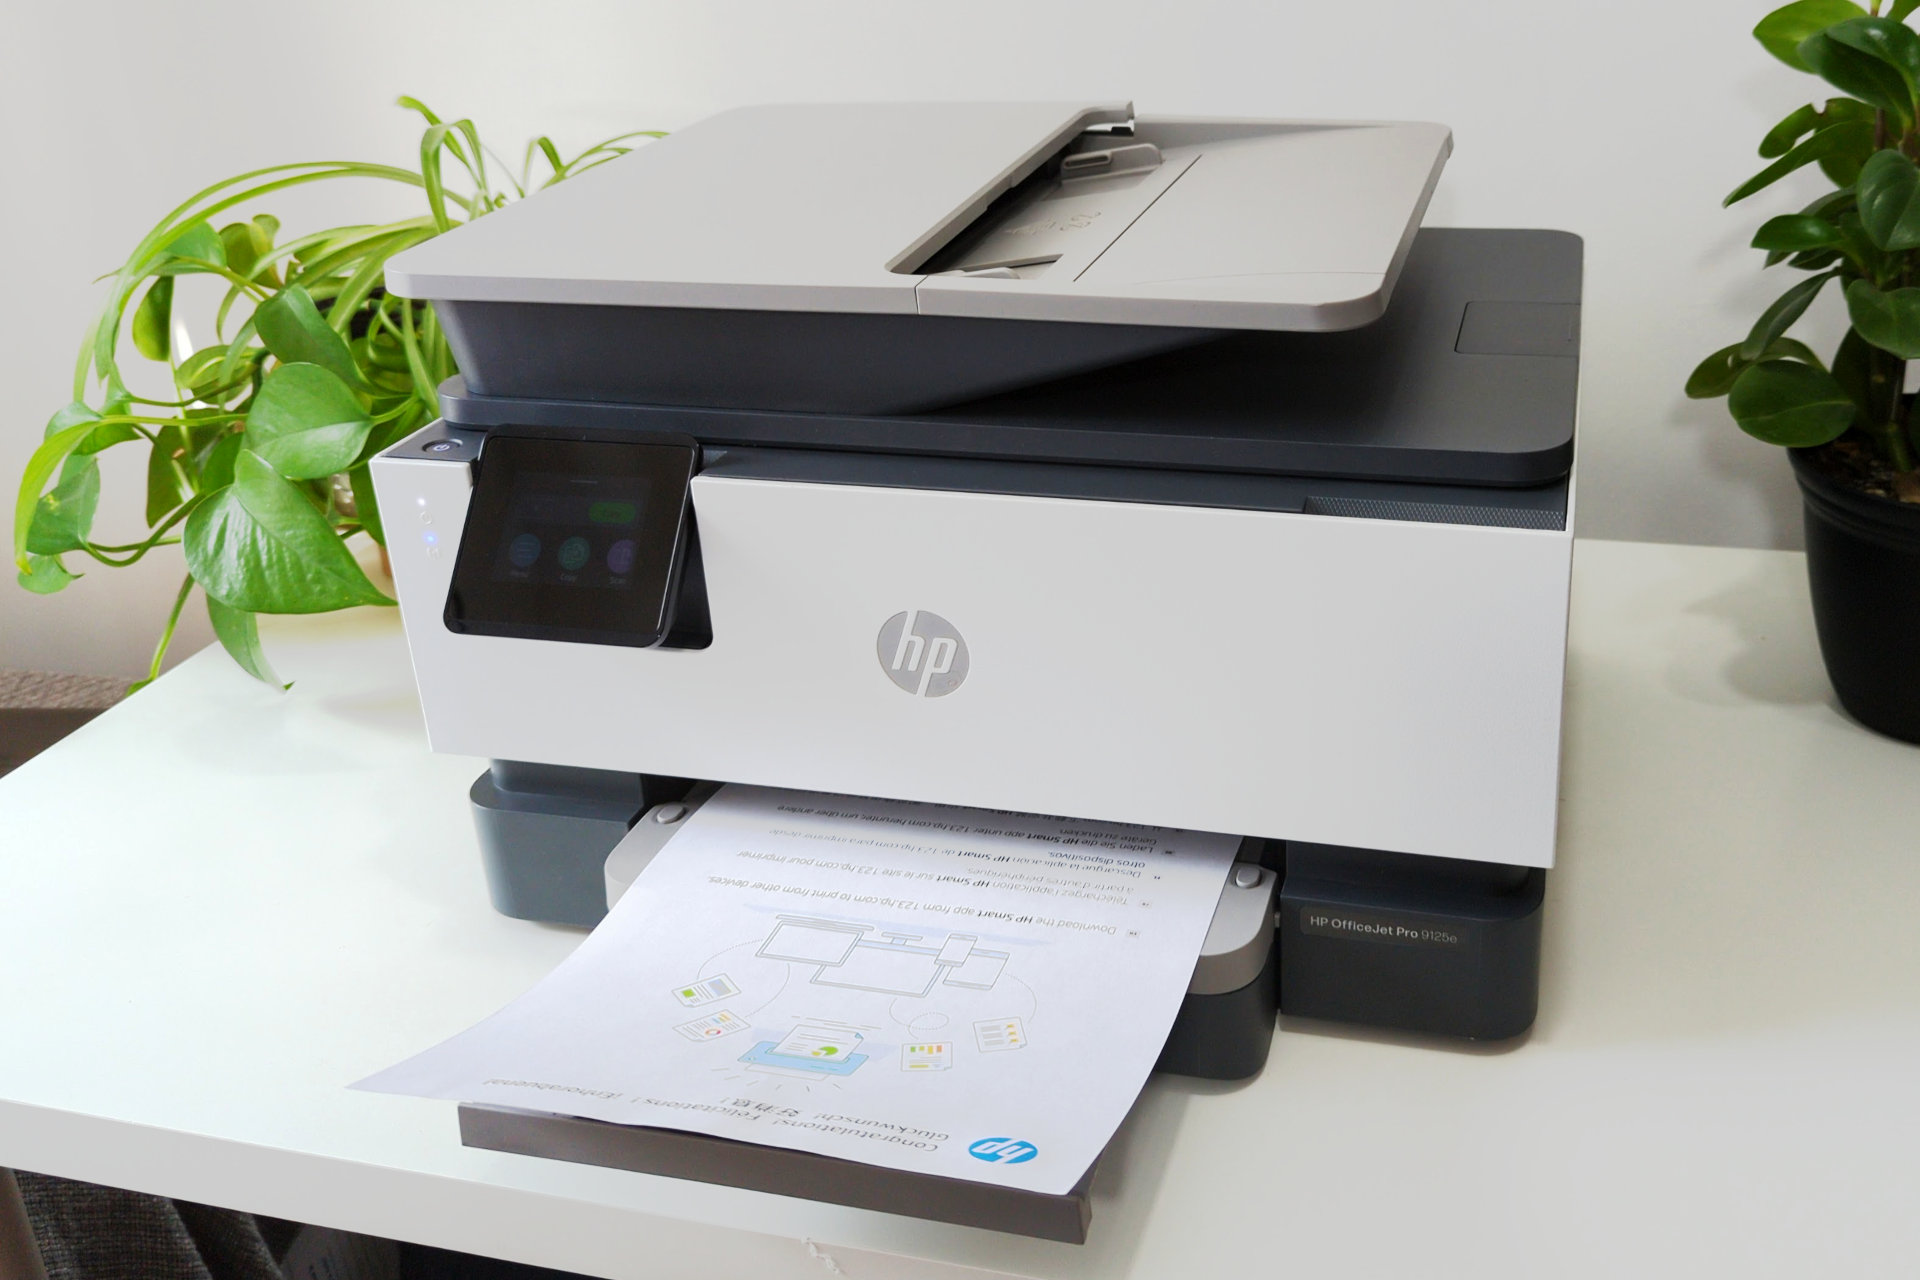 HP OfficeJet Pro 9125e روی یک پایه سفید رنگ که توسط گیاهان احاطه شده است قرار دارد.